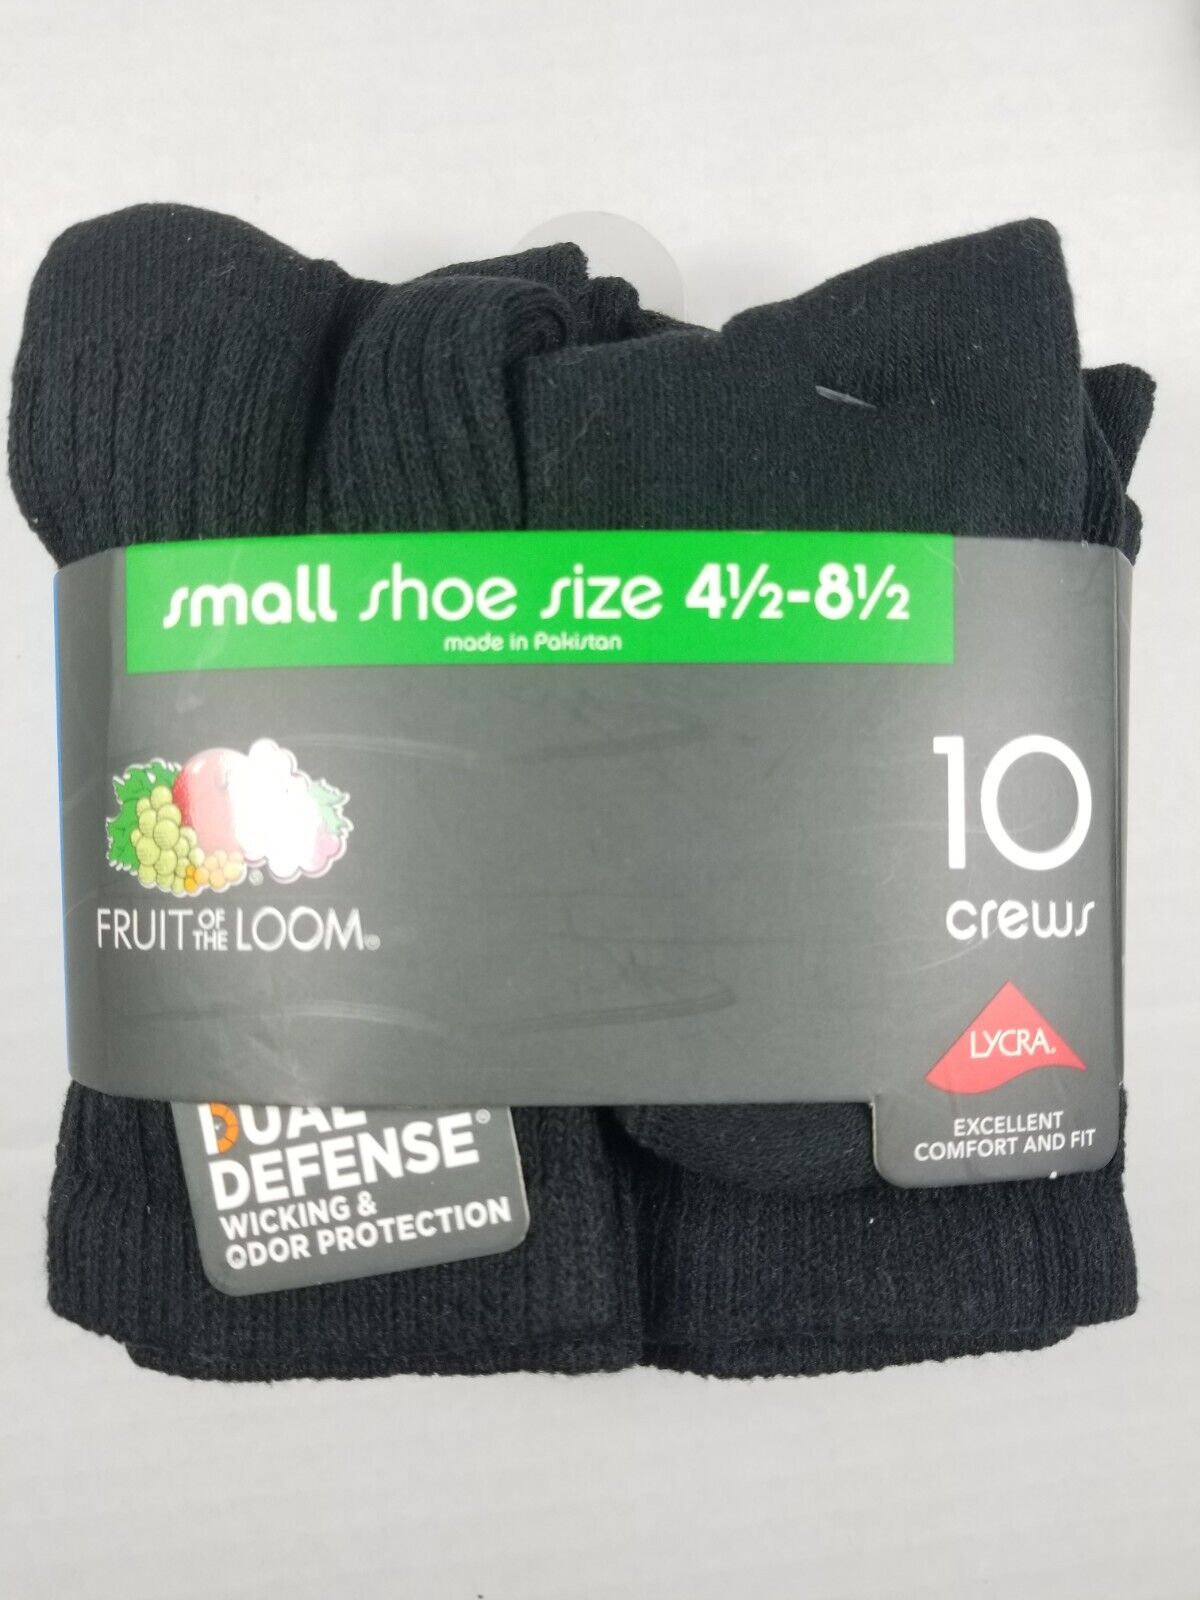 Fruit Of The Loom Boys Dual Defense Socks Crew S 4.5 - 8.5, M 9 - 2.5 Nwt Black